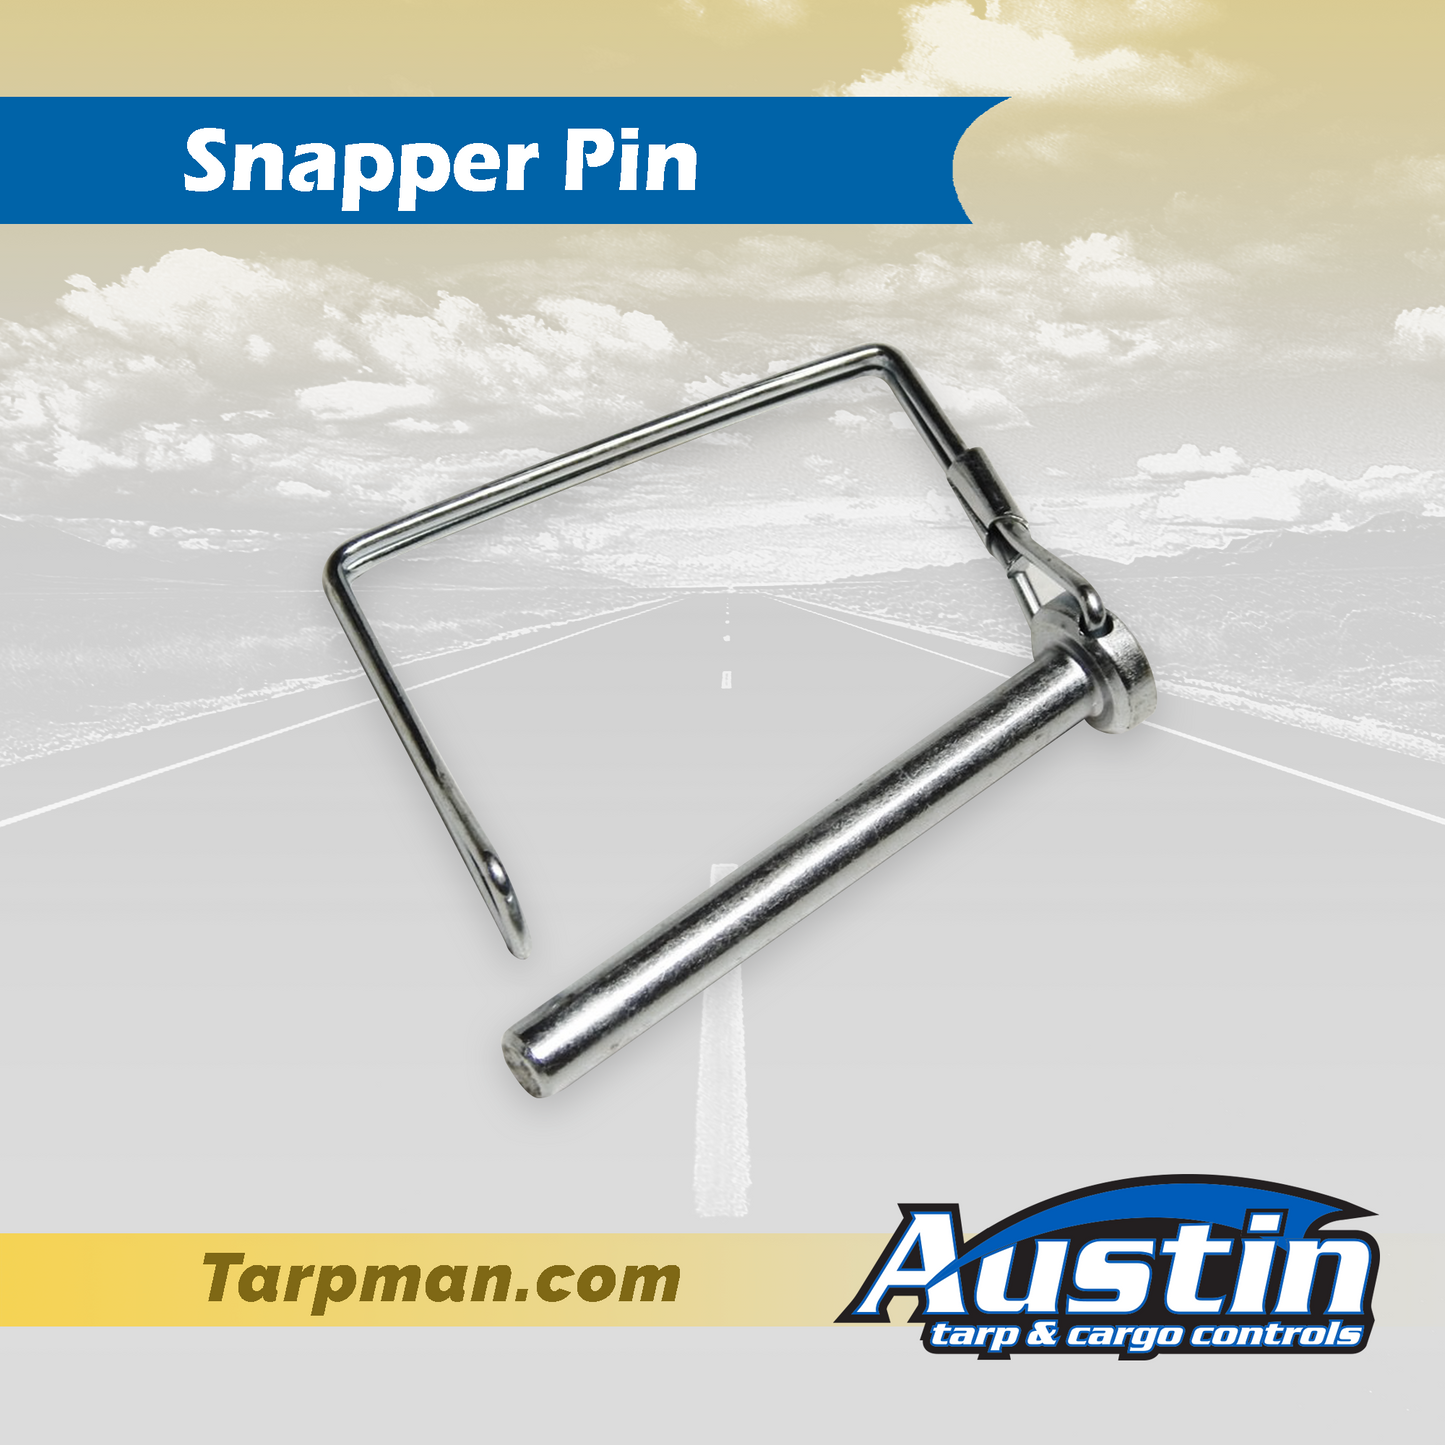 Snapper Pin